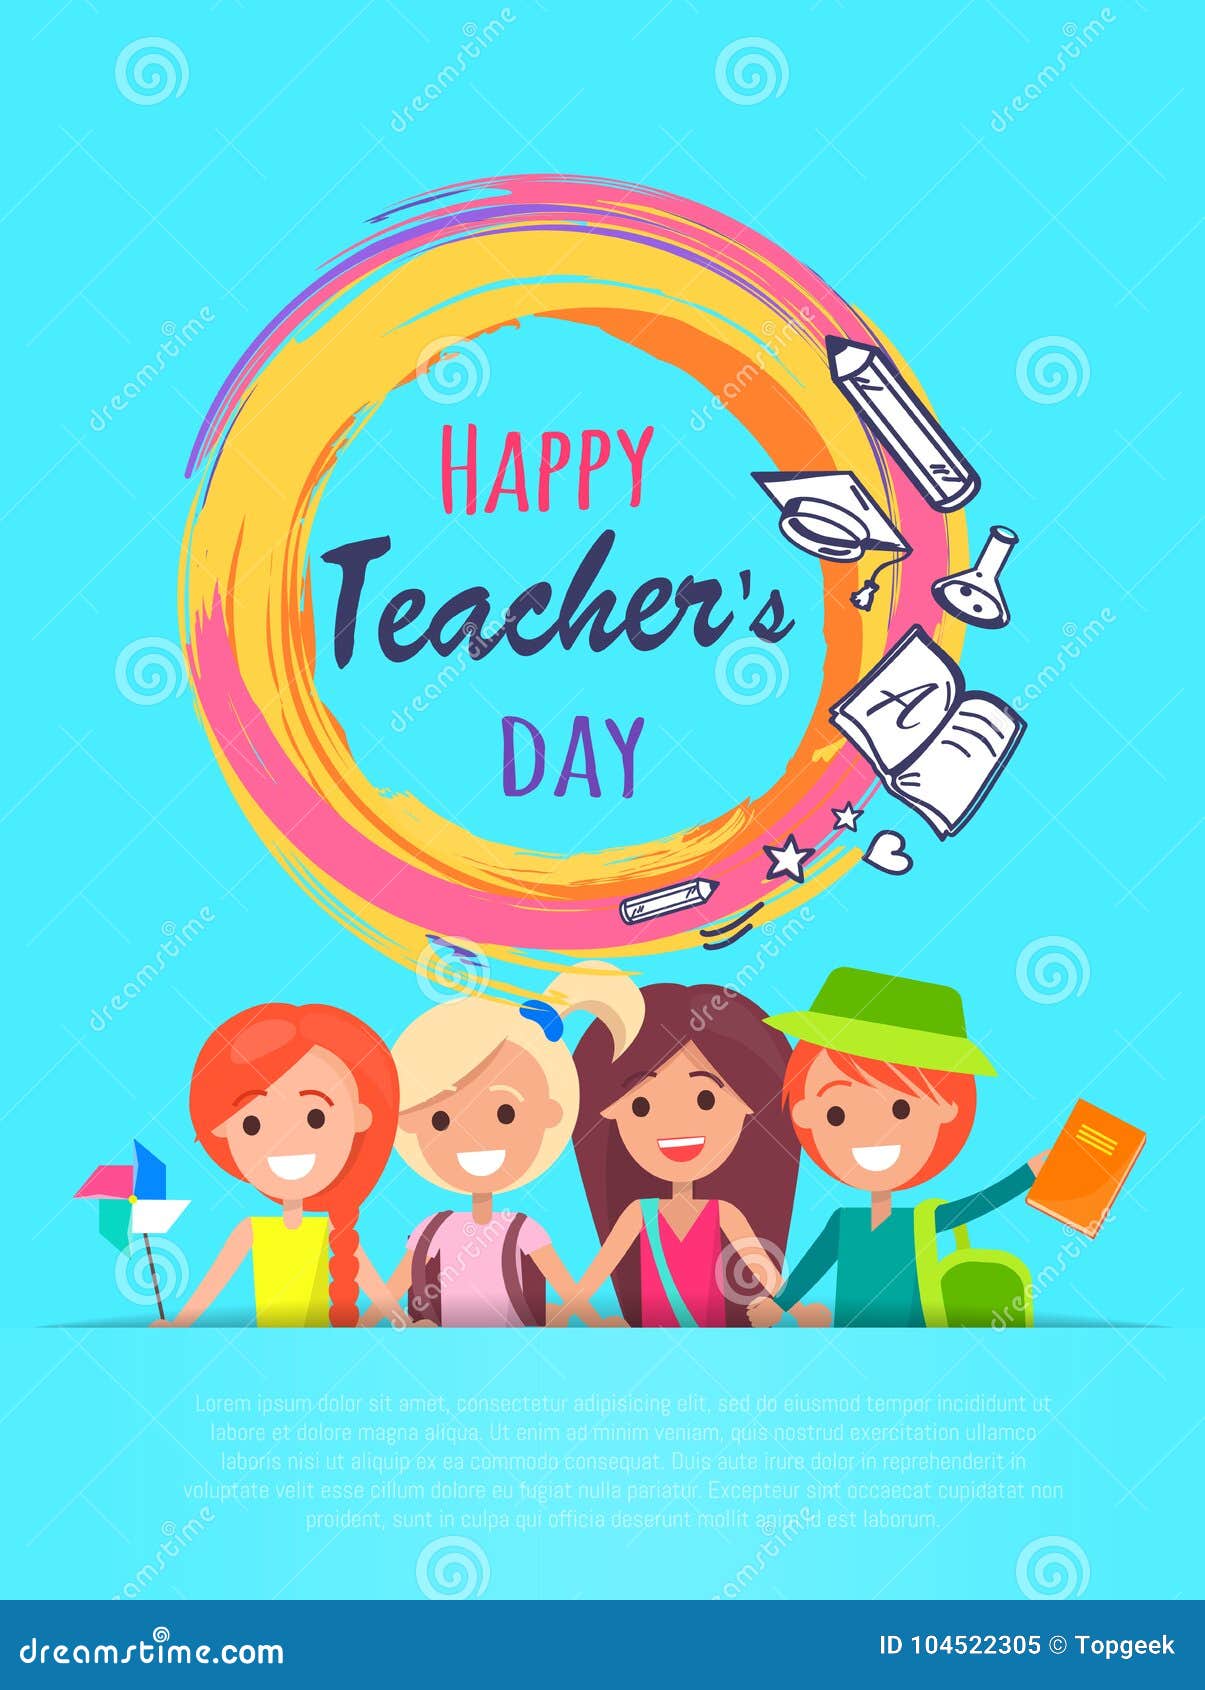 Happy Teachers Day Banner Vector Illustration Stock Vector ...